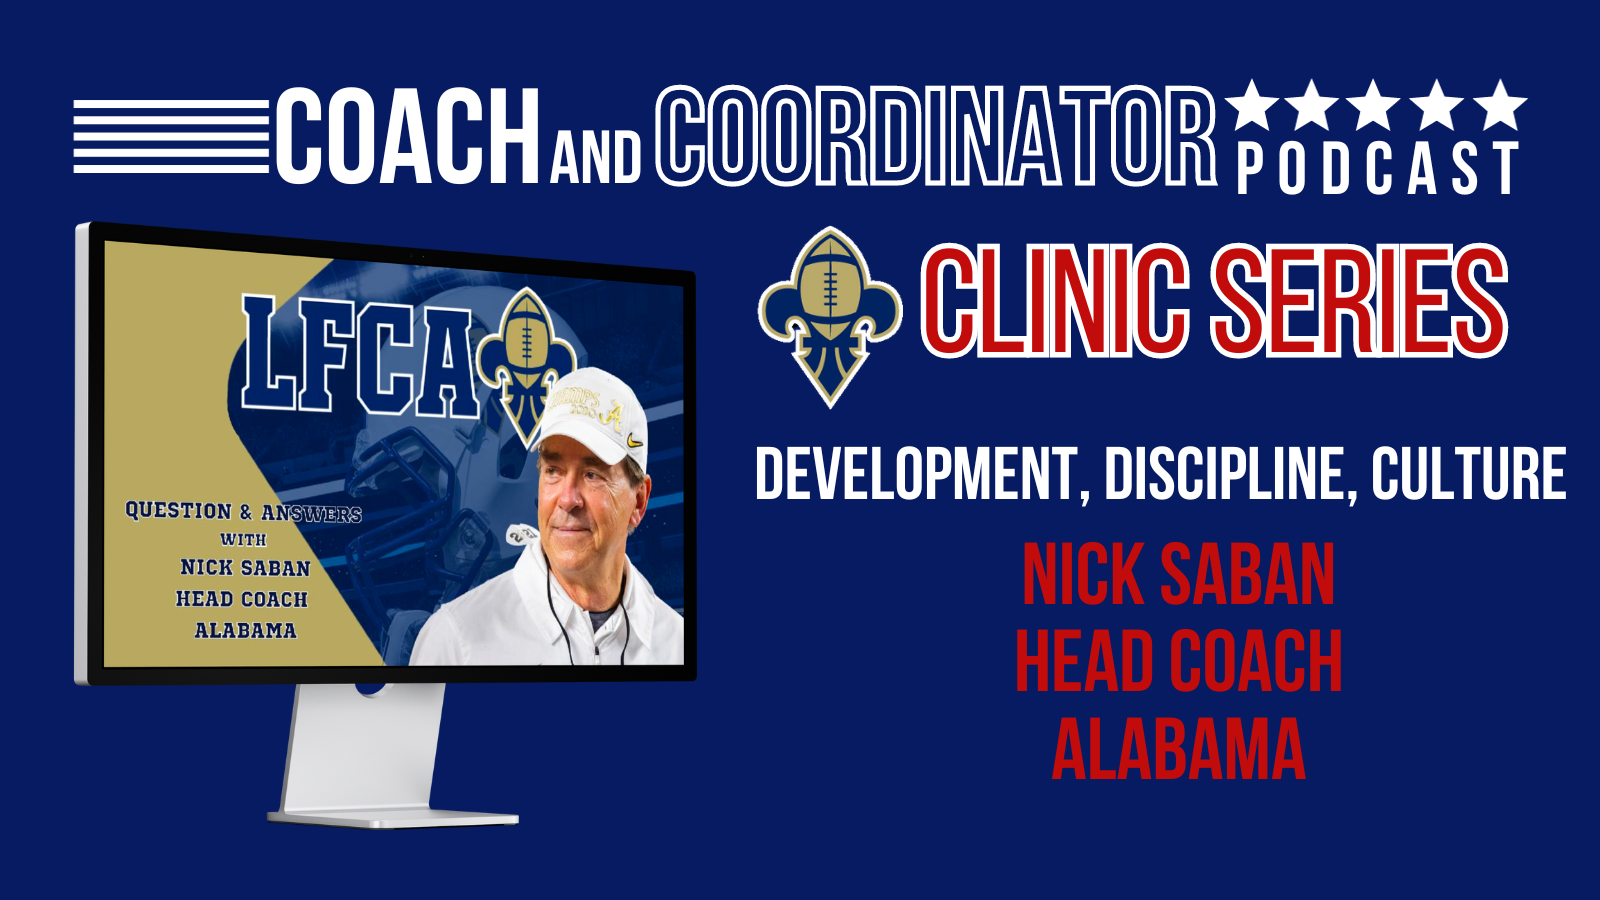 Nick Saban, Head Coach, Alabama